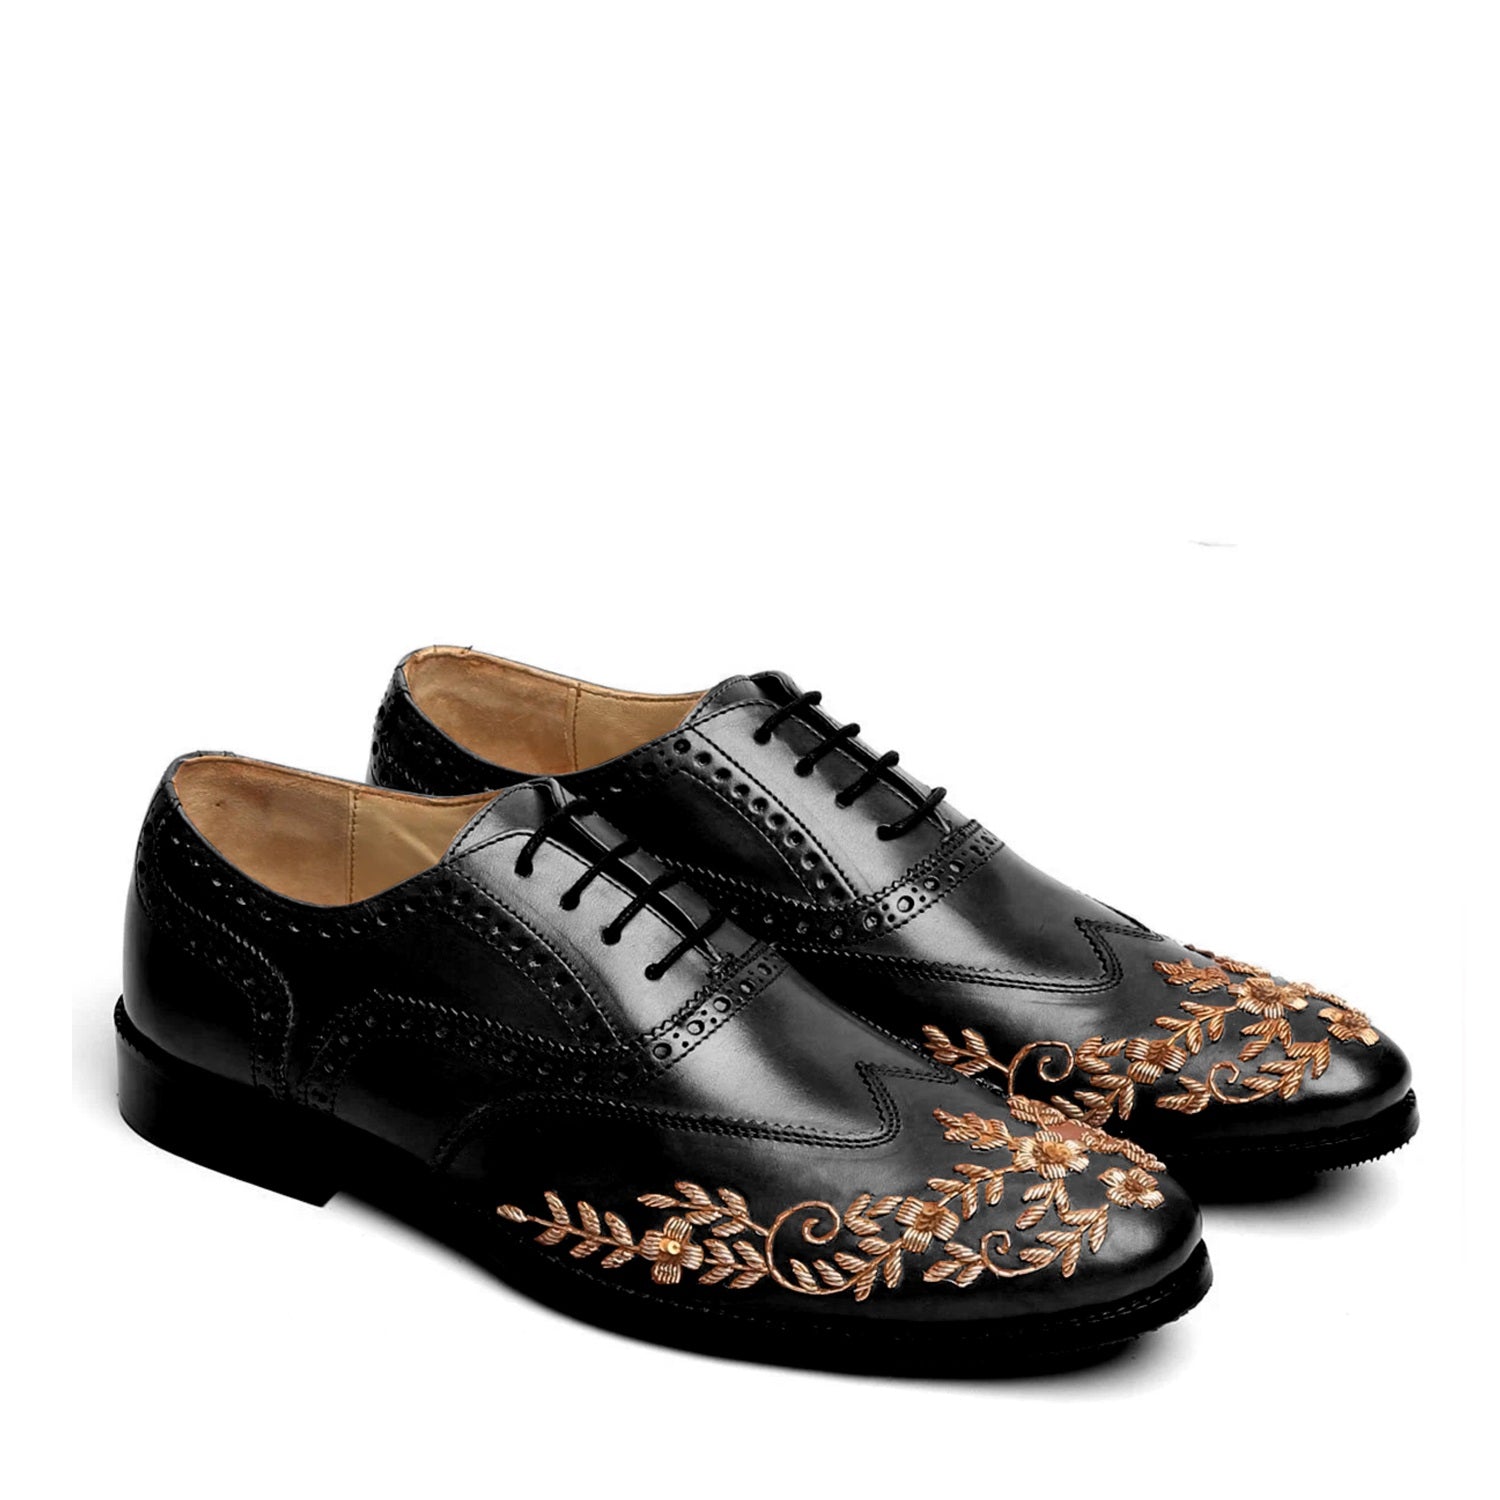 Black Leather Formal Shoes with Golden Zardosi Wingtip Toe by Brune & Bareskin